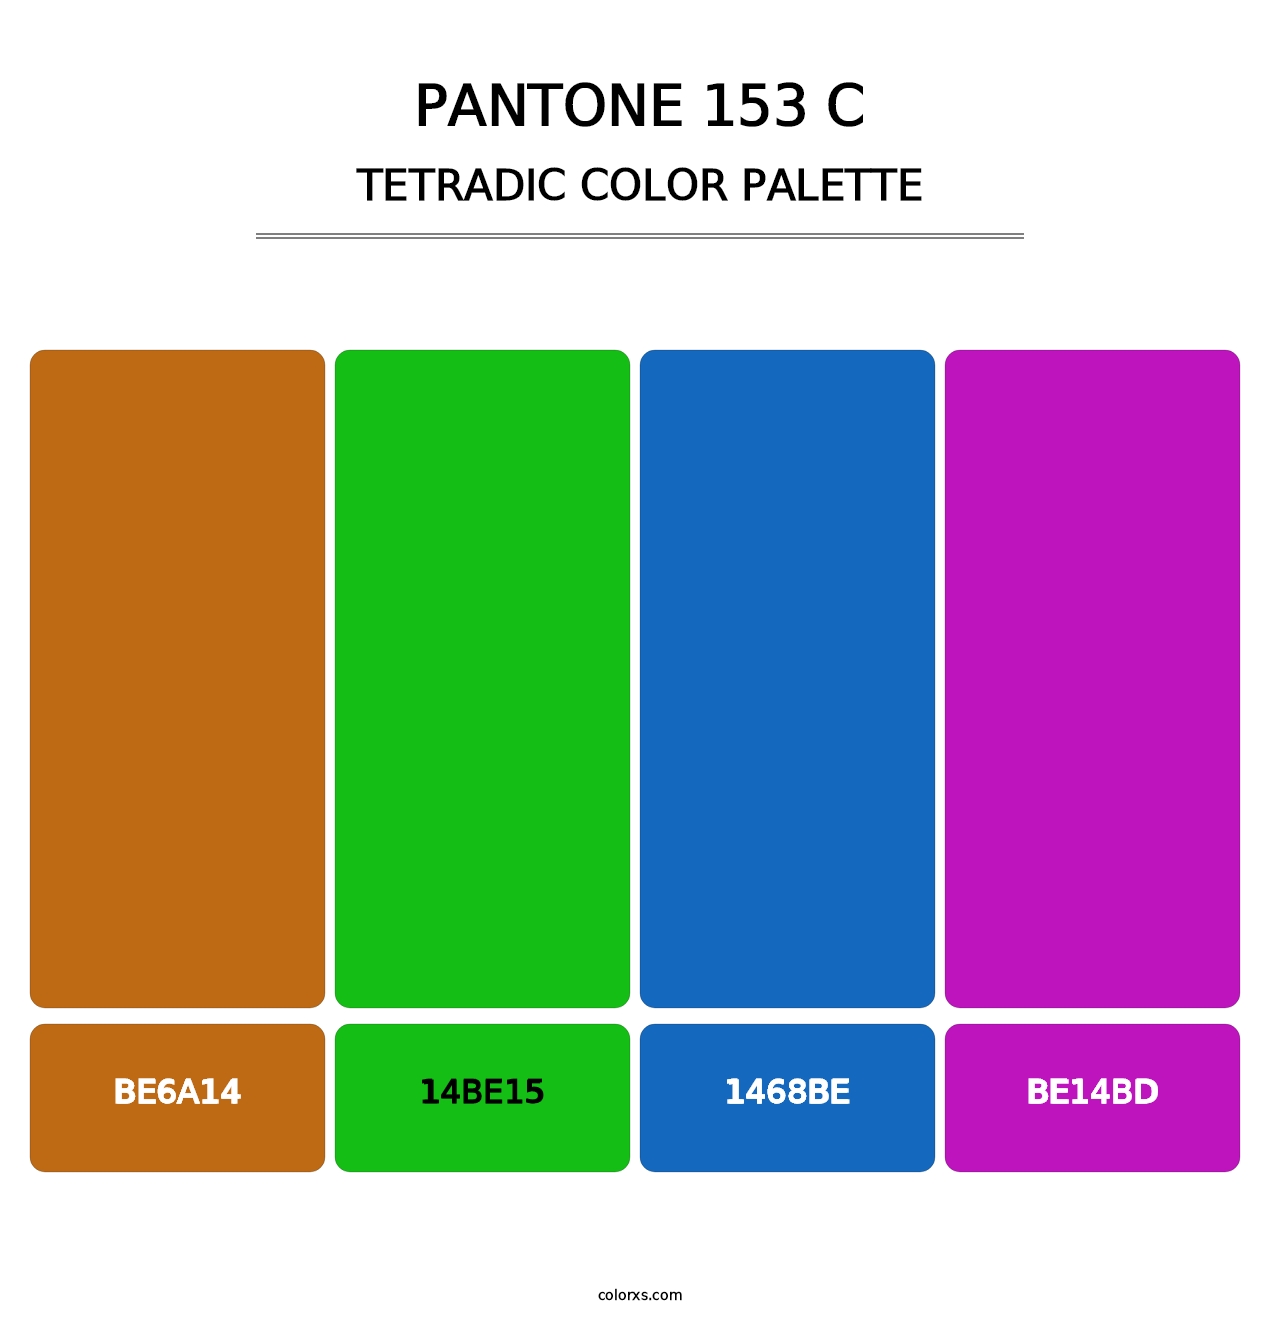 PANTONE 153 C - Tetradic Color Palette